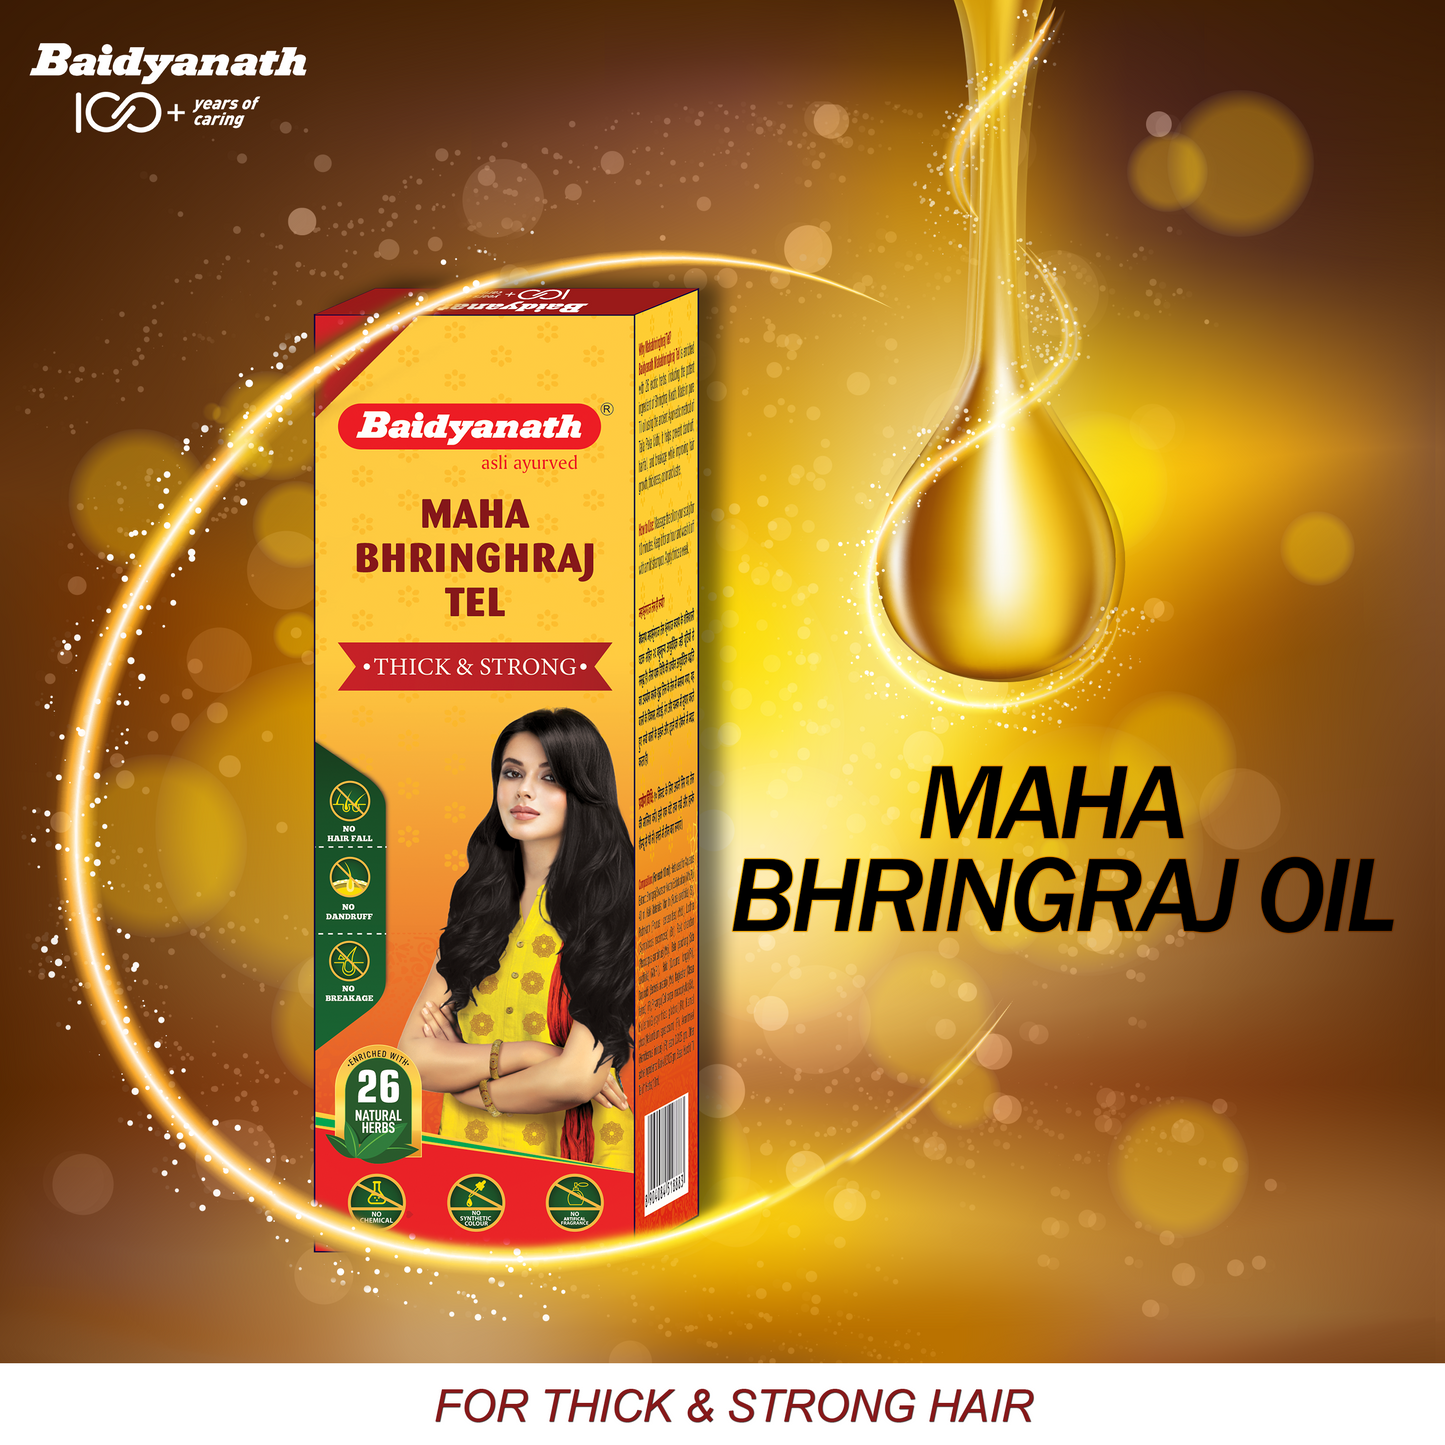 Baidyanath Mahabhringraj Oil (MED) - Ayurvedic Hair Oil With No Added Chemicals Or Fragrance